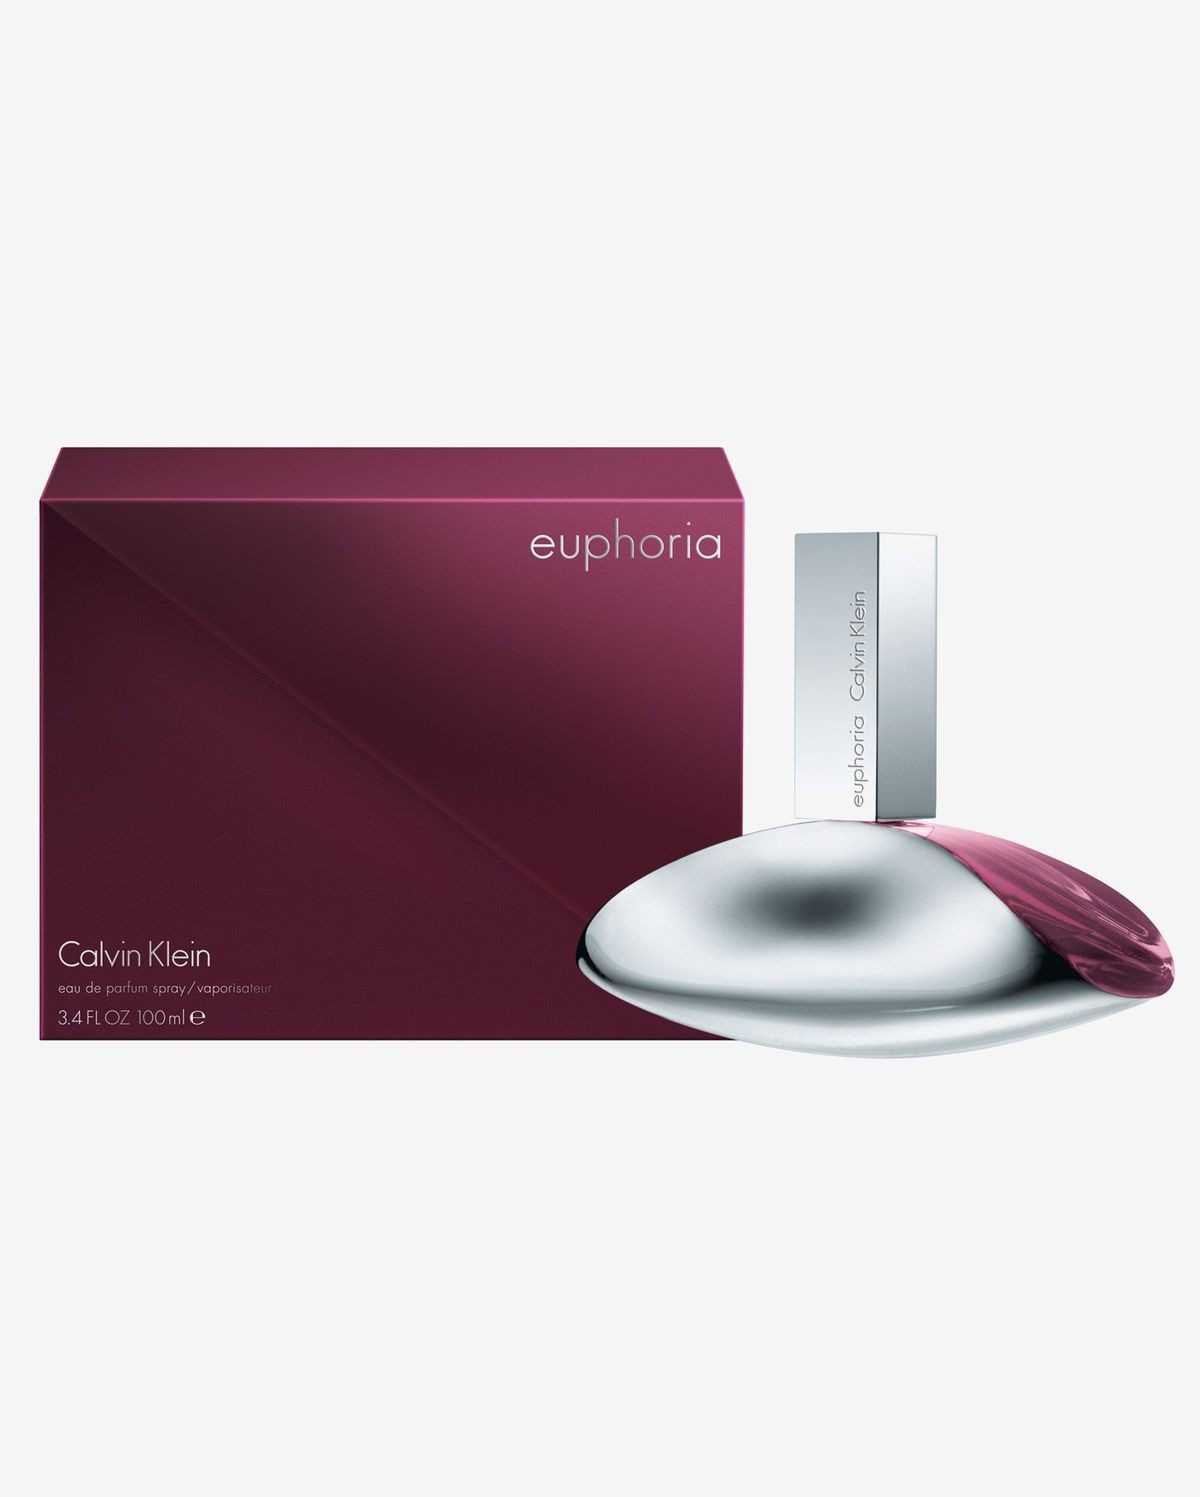 Calvin Klein - euphoria perfume 100mls